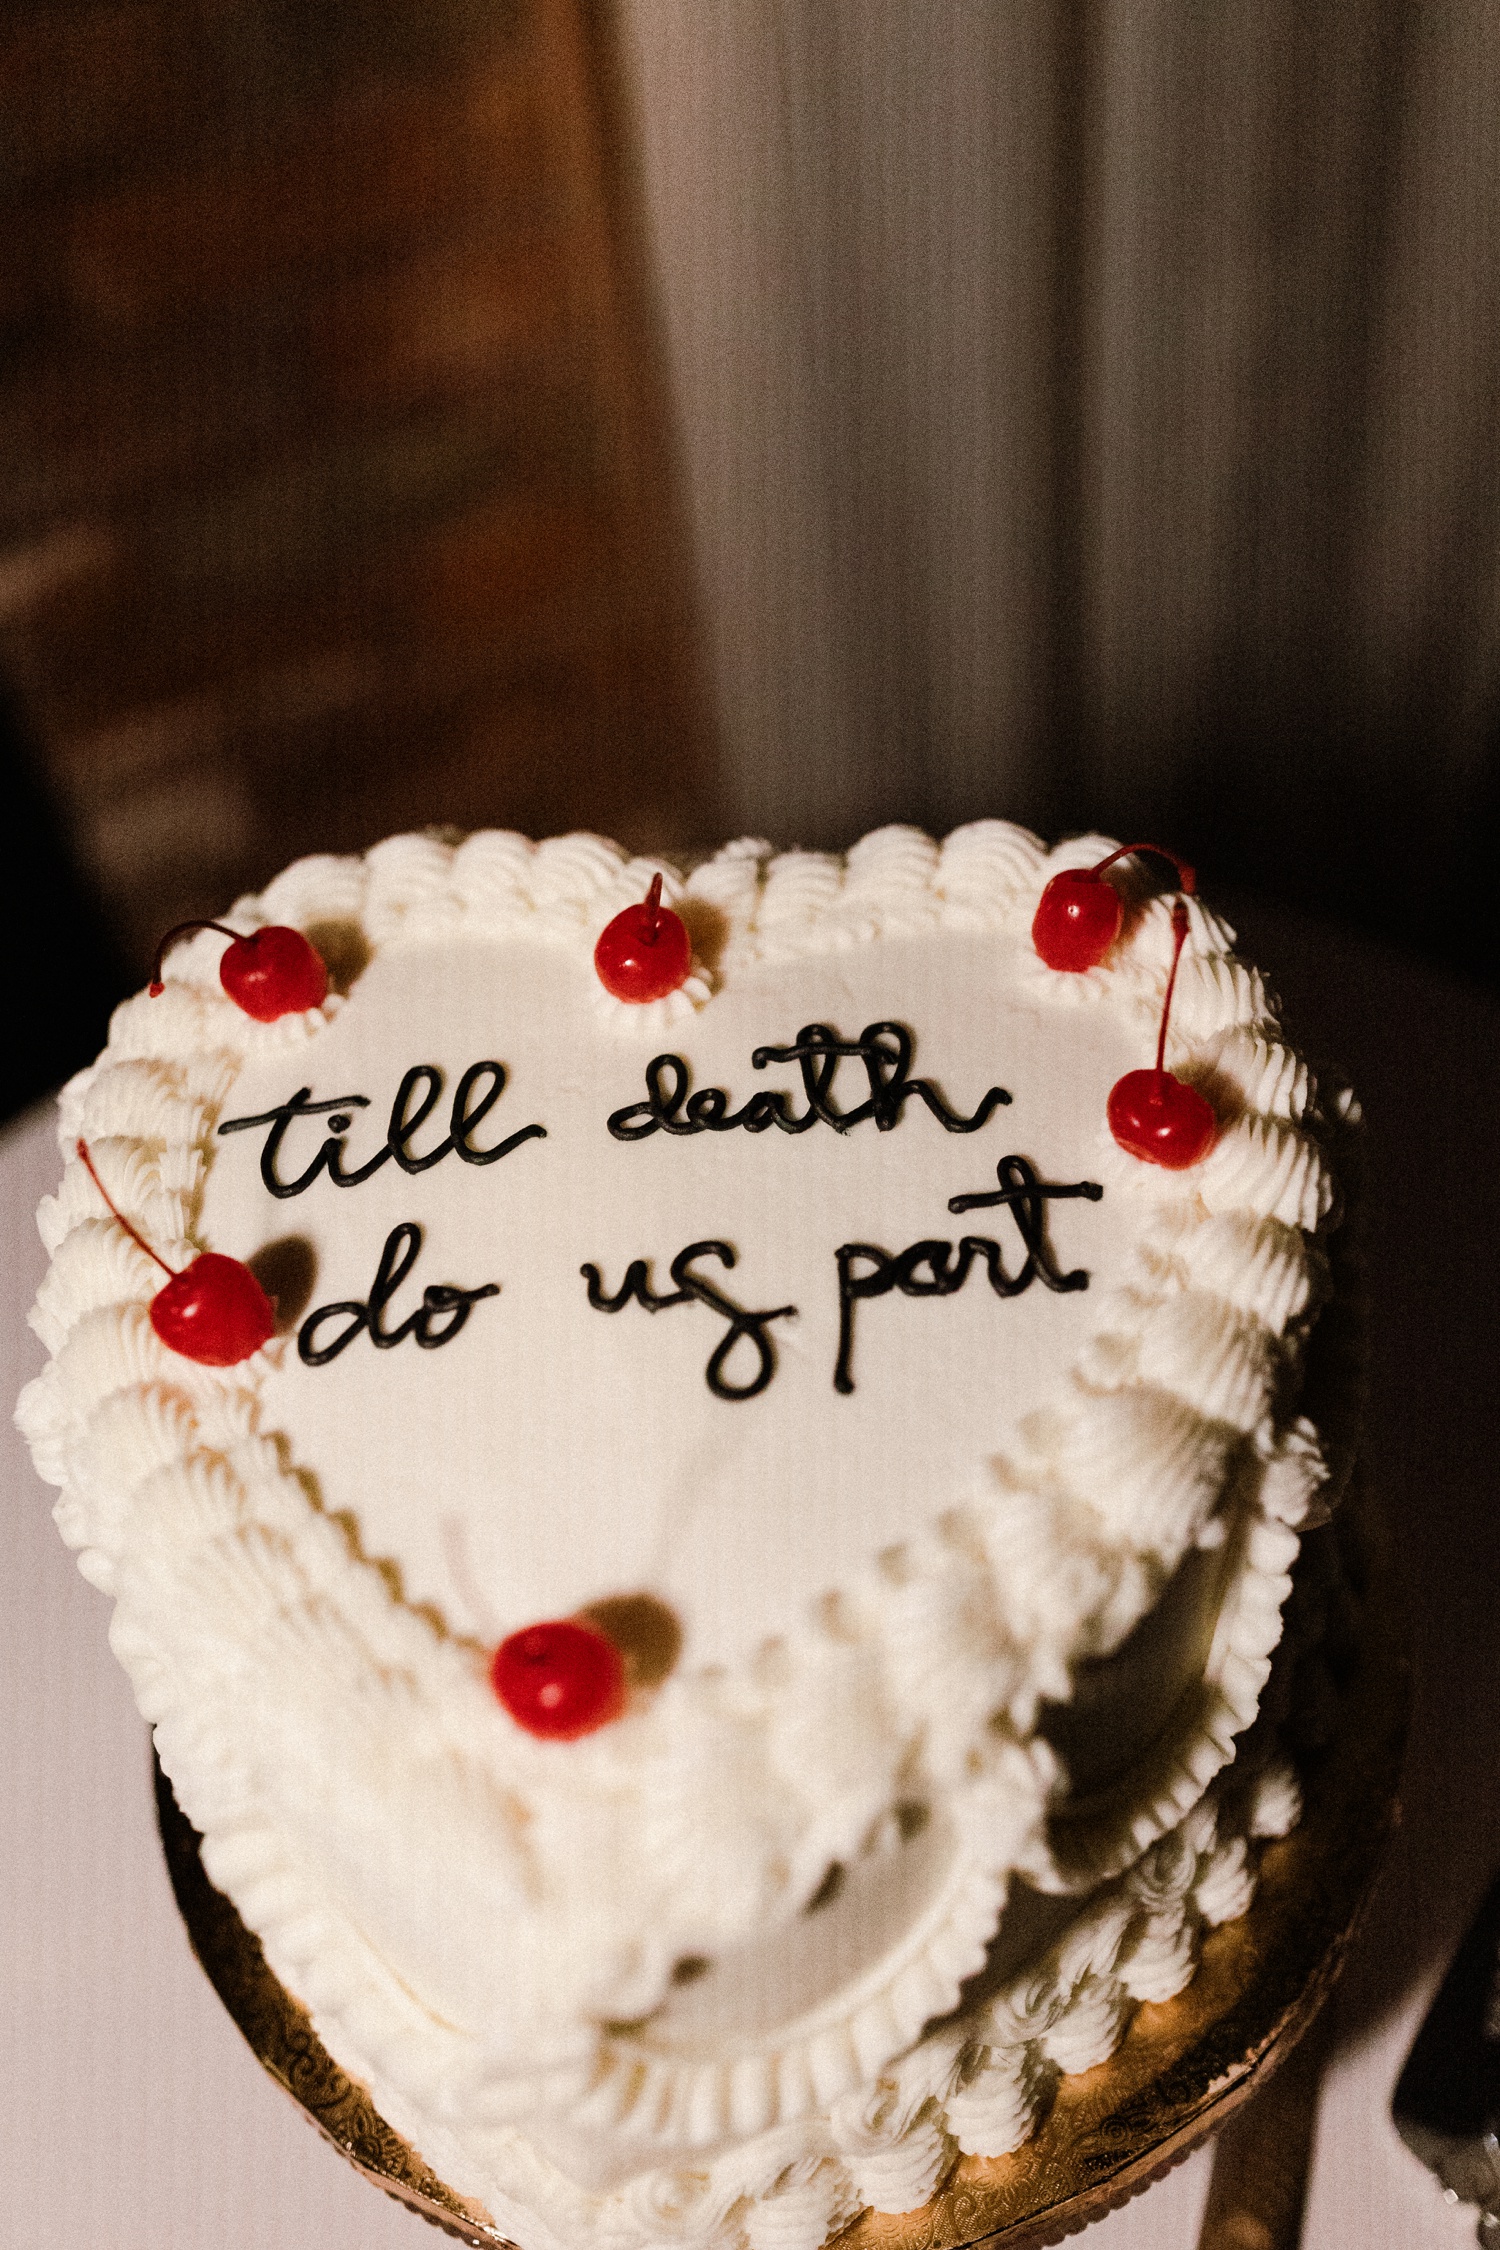 "Till Death Do Us Part" vintage heart shape cake at a Houston wedding